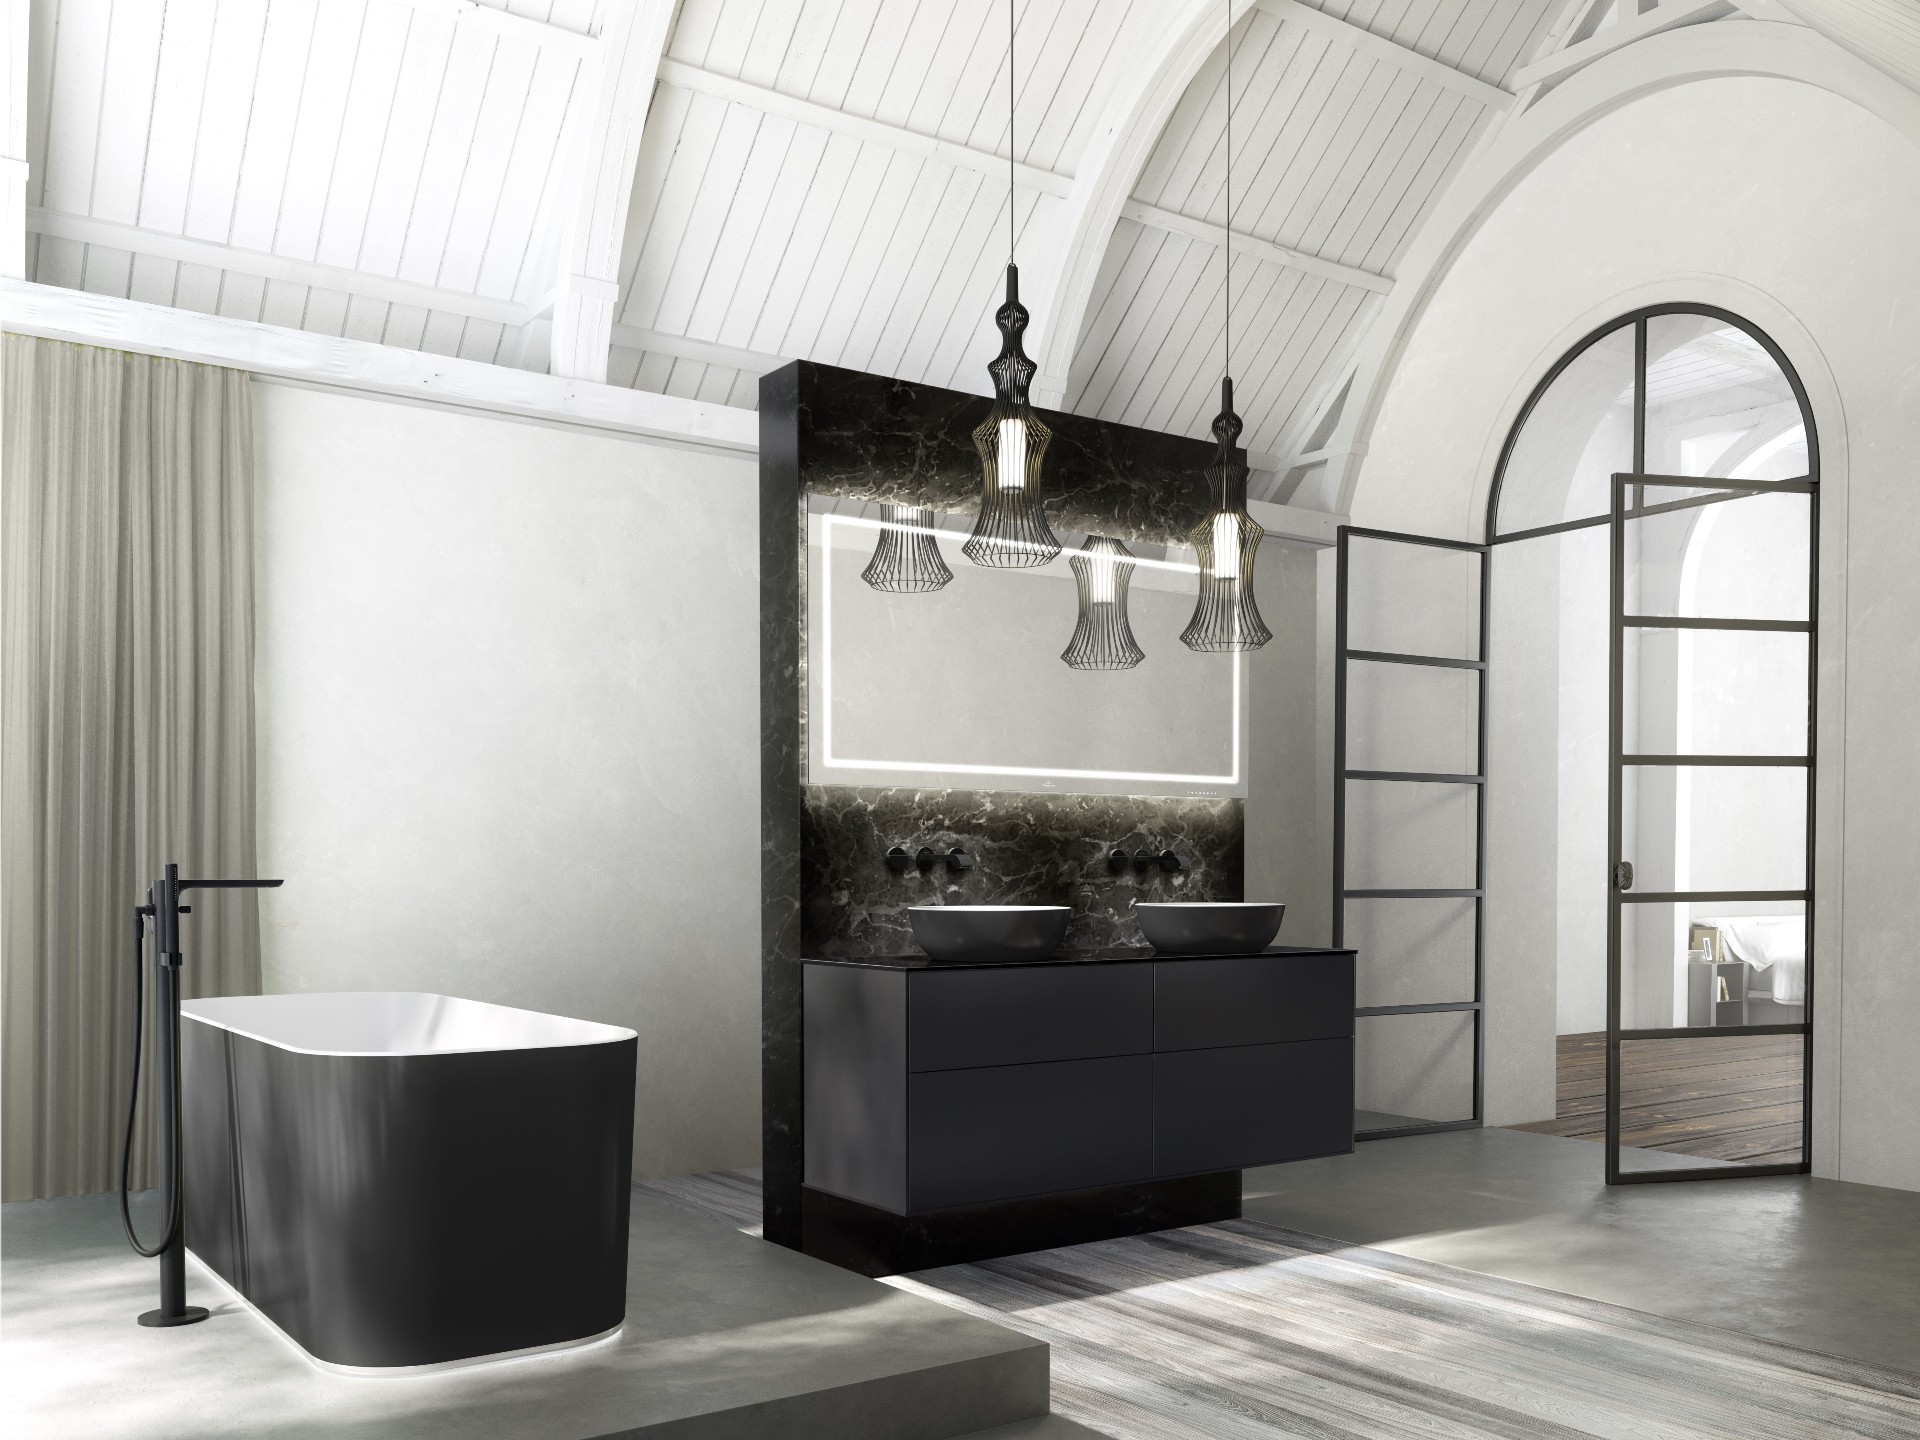 A black bathroom design with Villeroy & Boch products